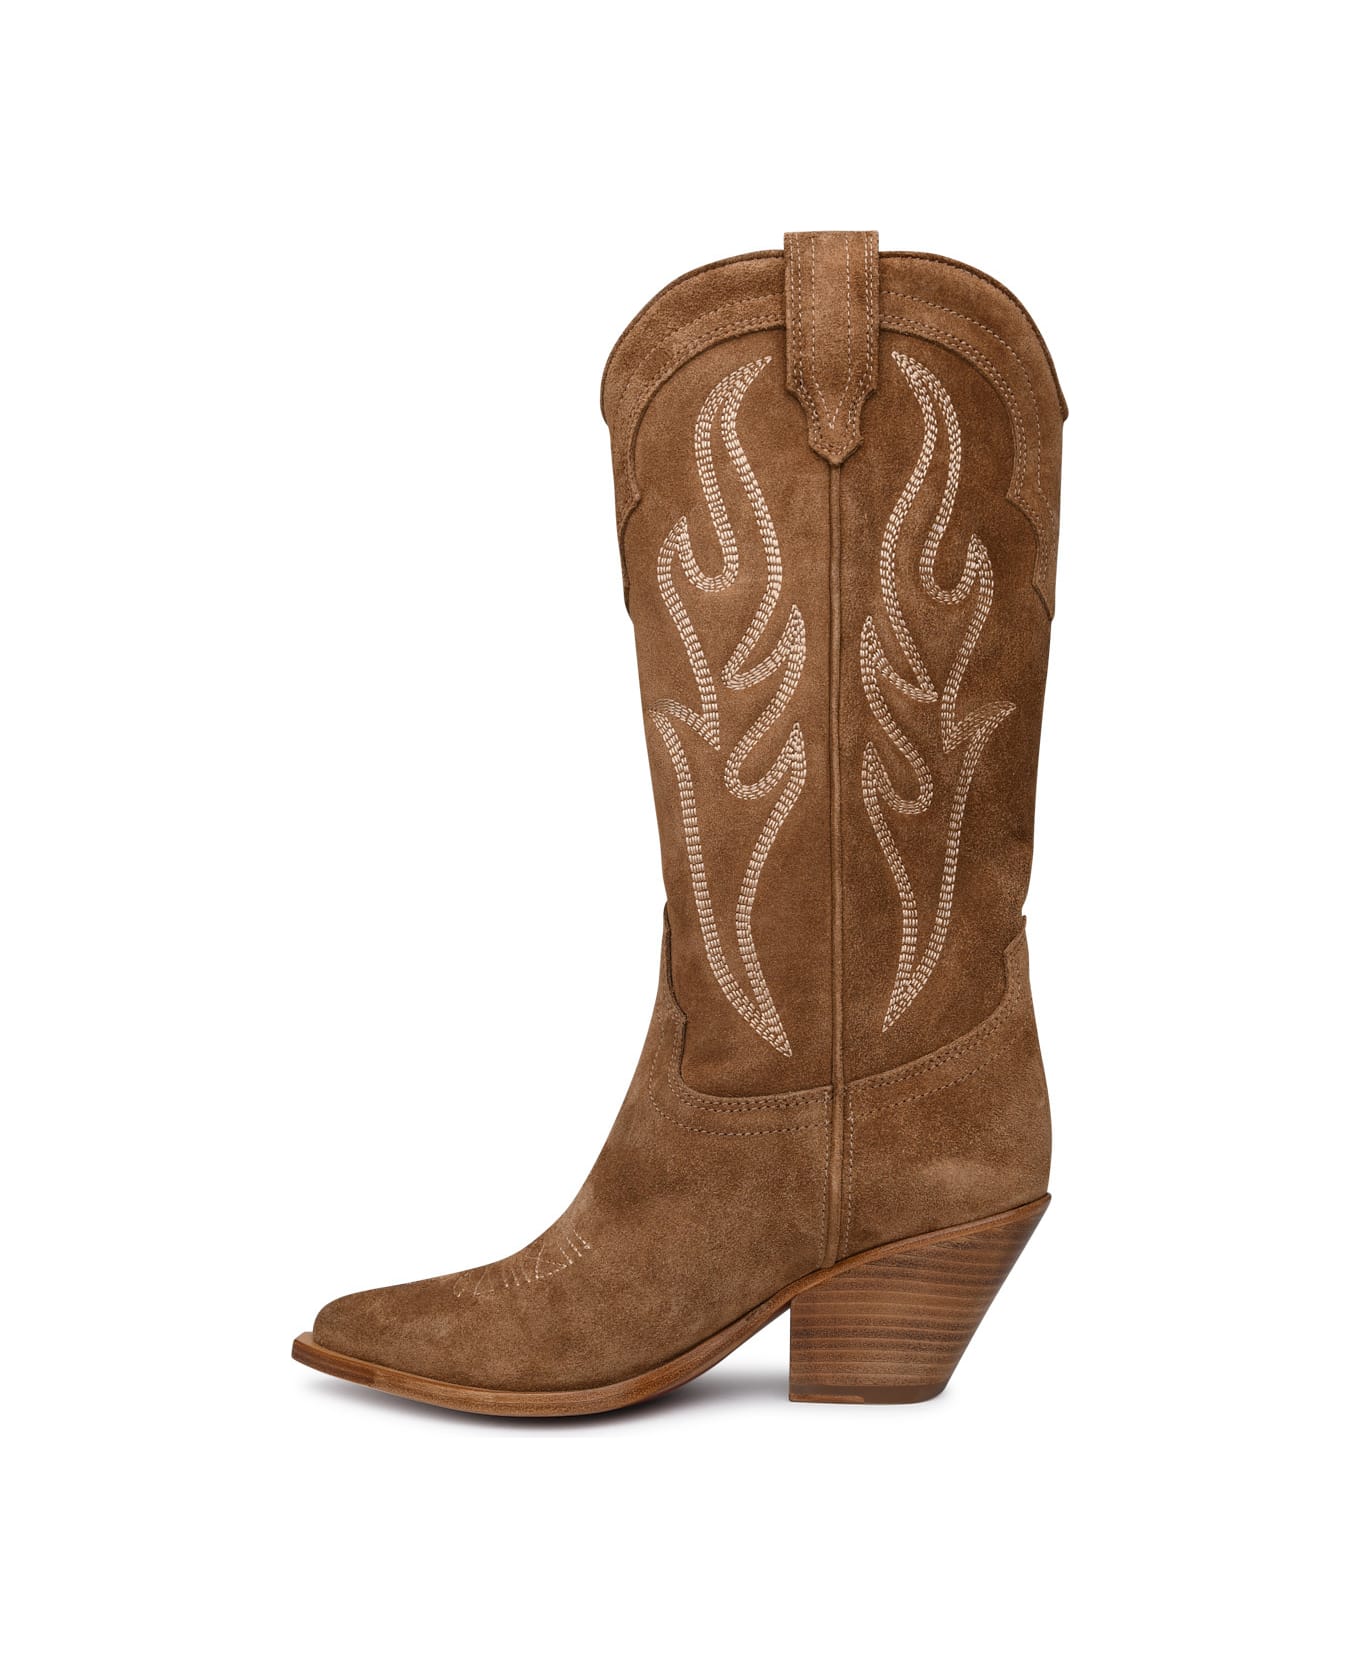 Sonora Santa Fe Beige Suede Boots - Brown ブーツ